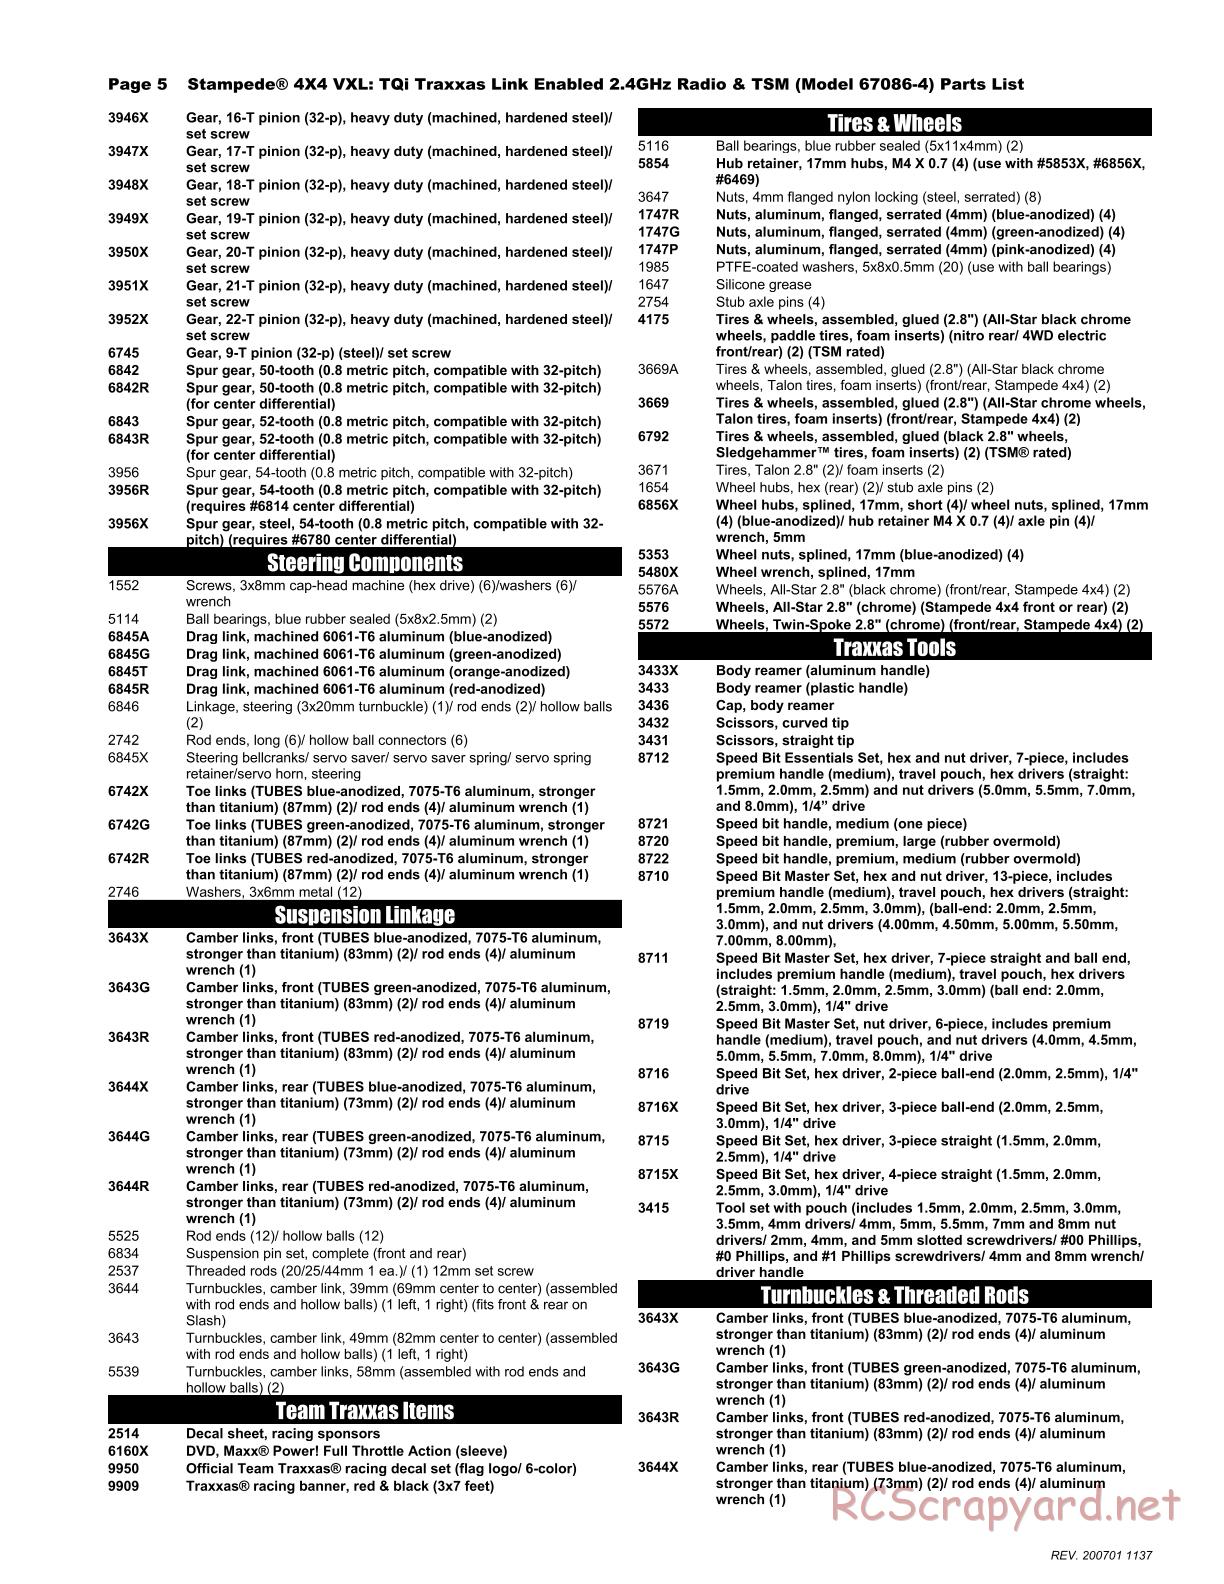 Traxxas - Stampede 4x4 VXL TSM - Parts List - Page 5